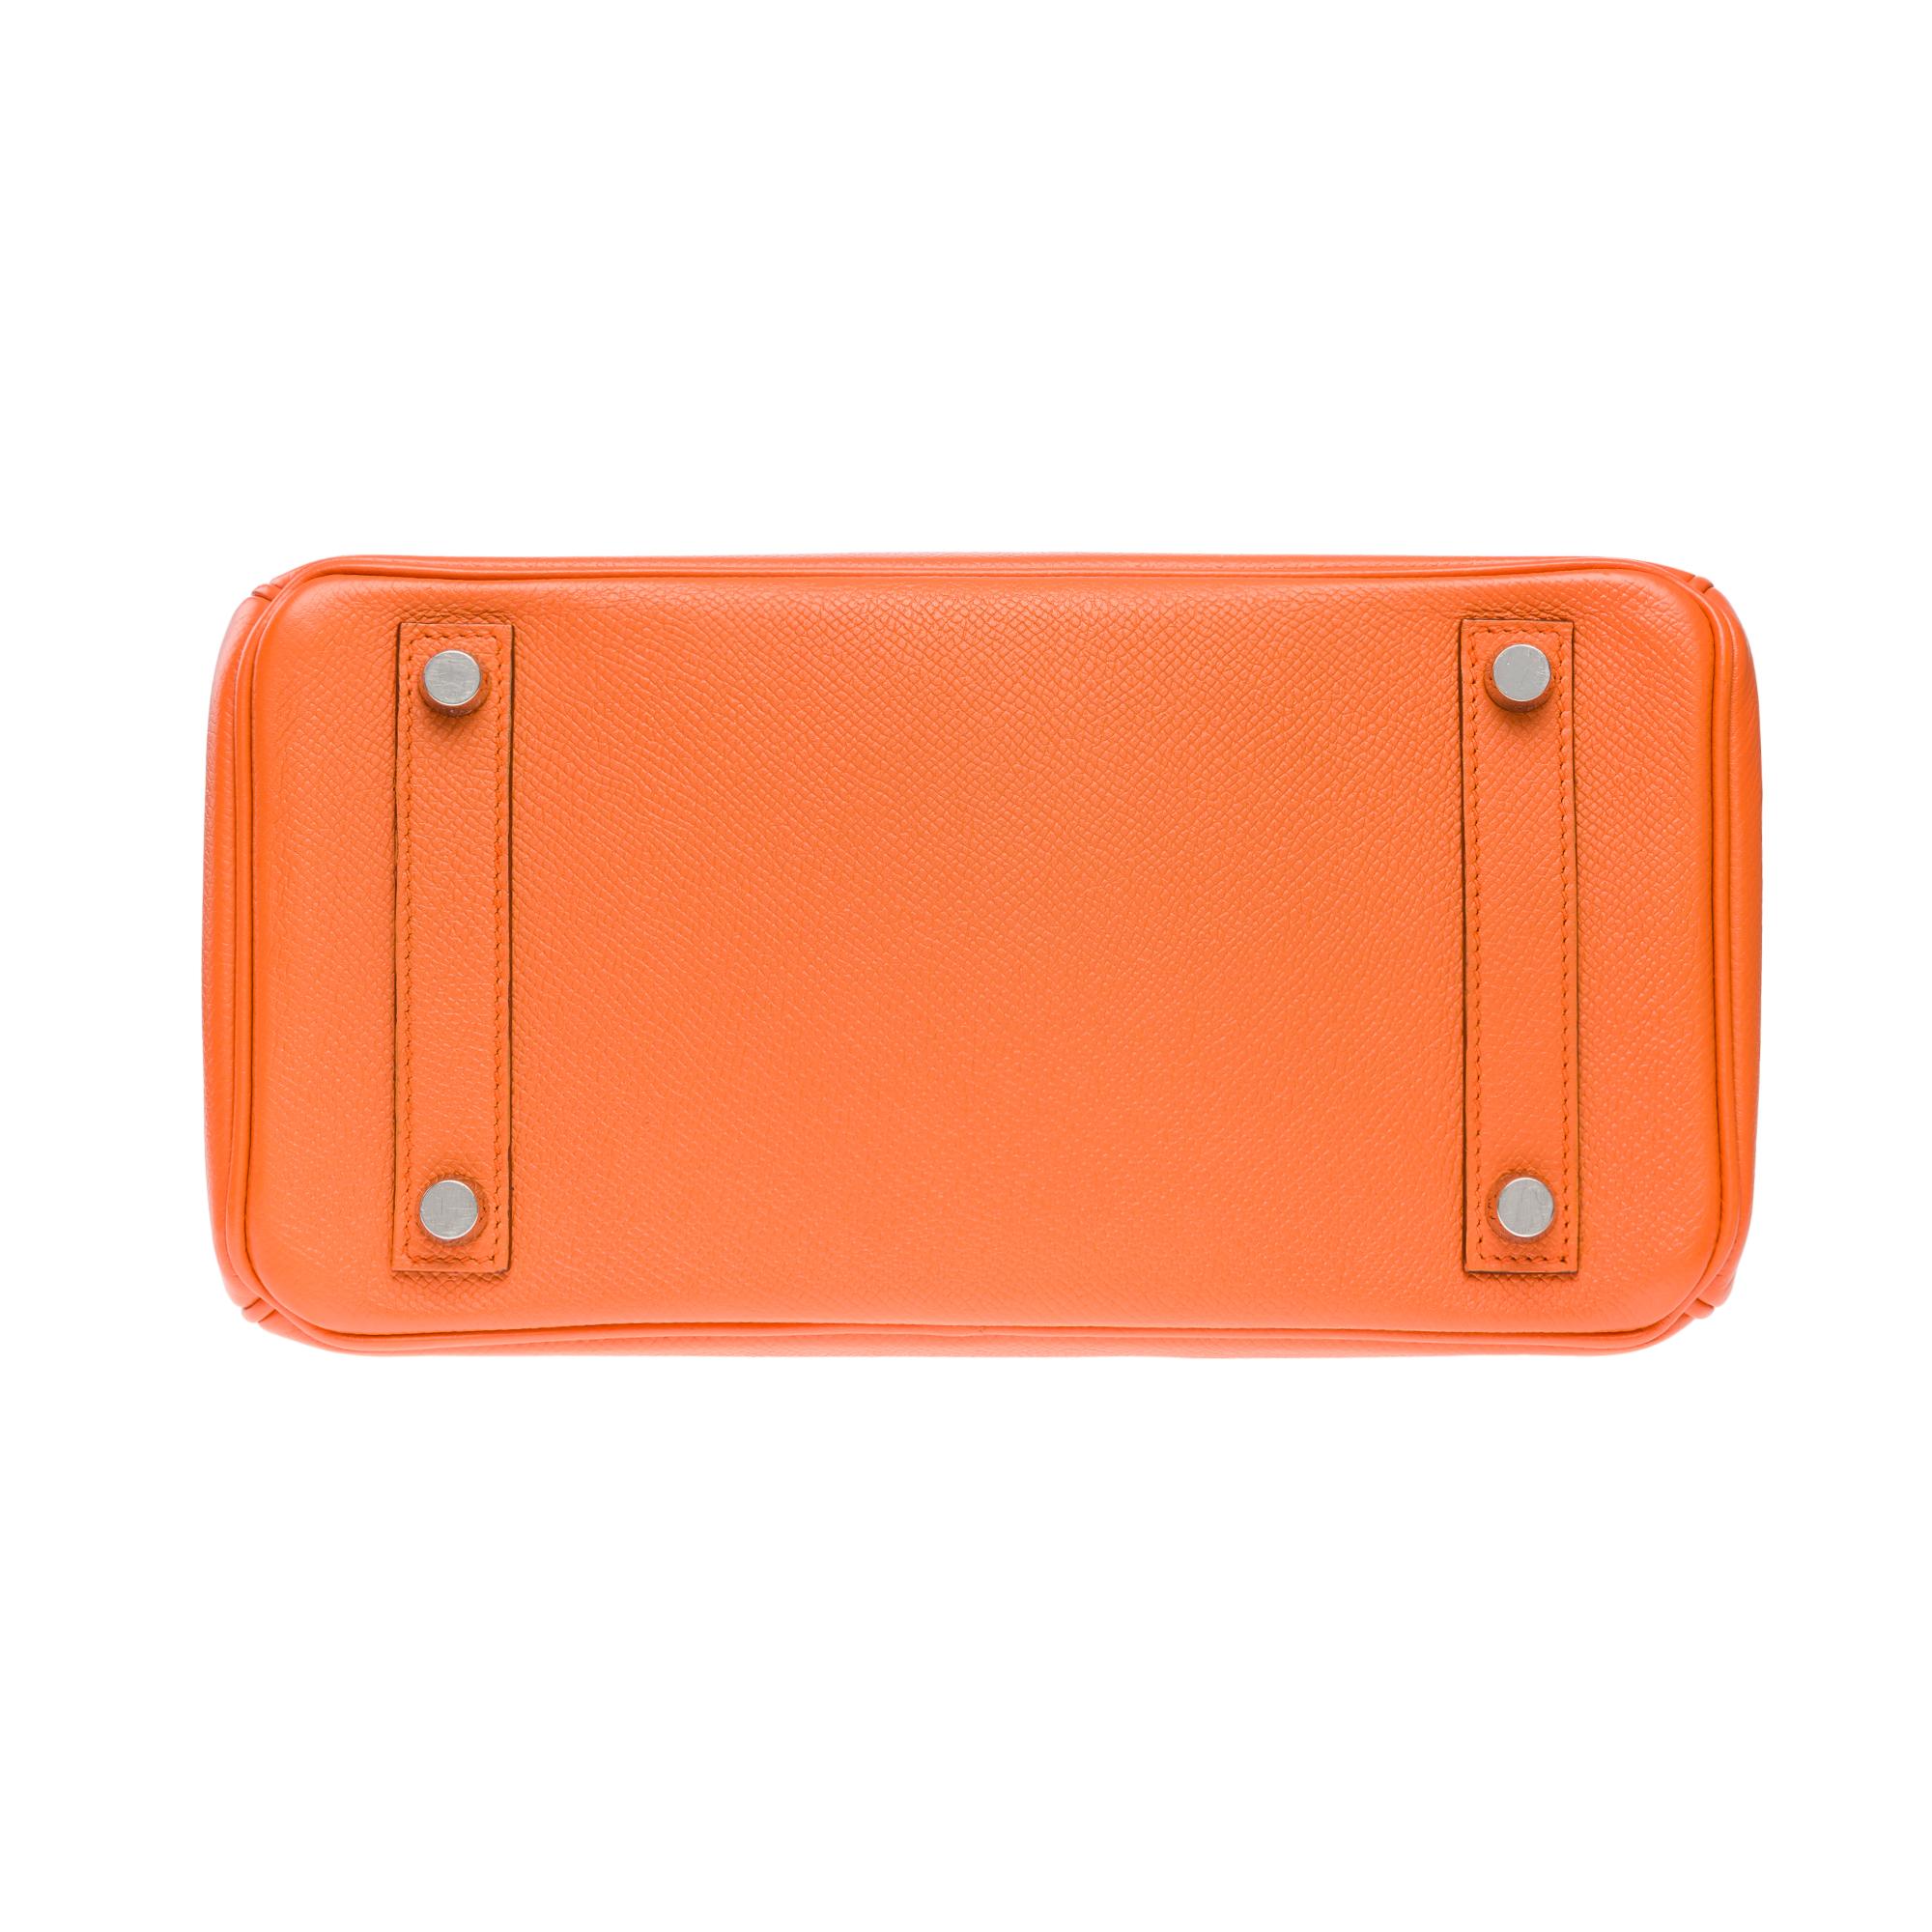 Bright Hermes Birkin 25cm handbag in Orange Epsom calf leather, SHW For Sale 8